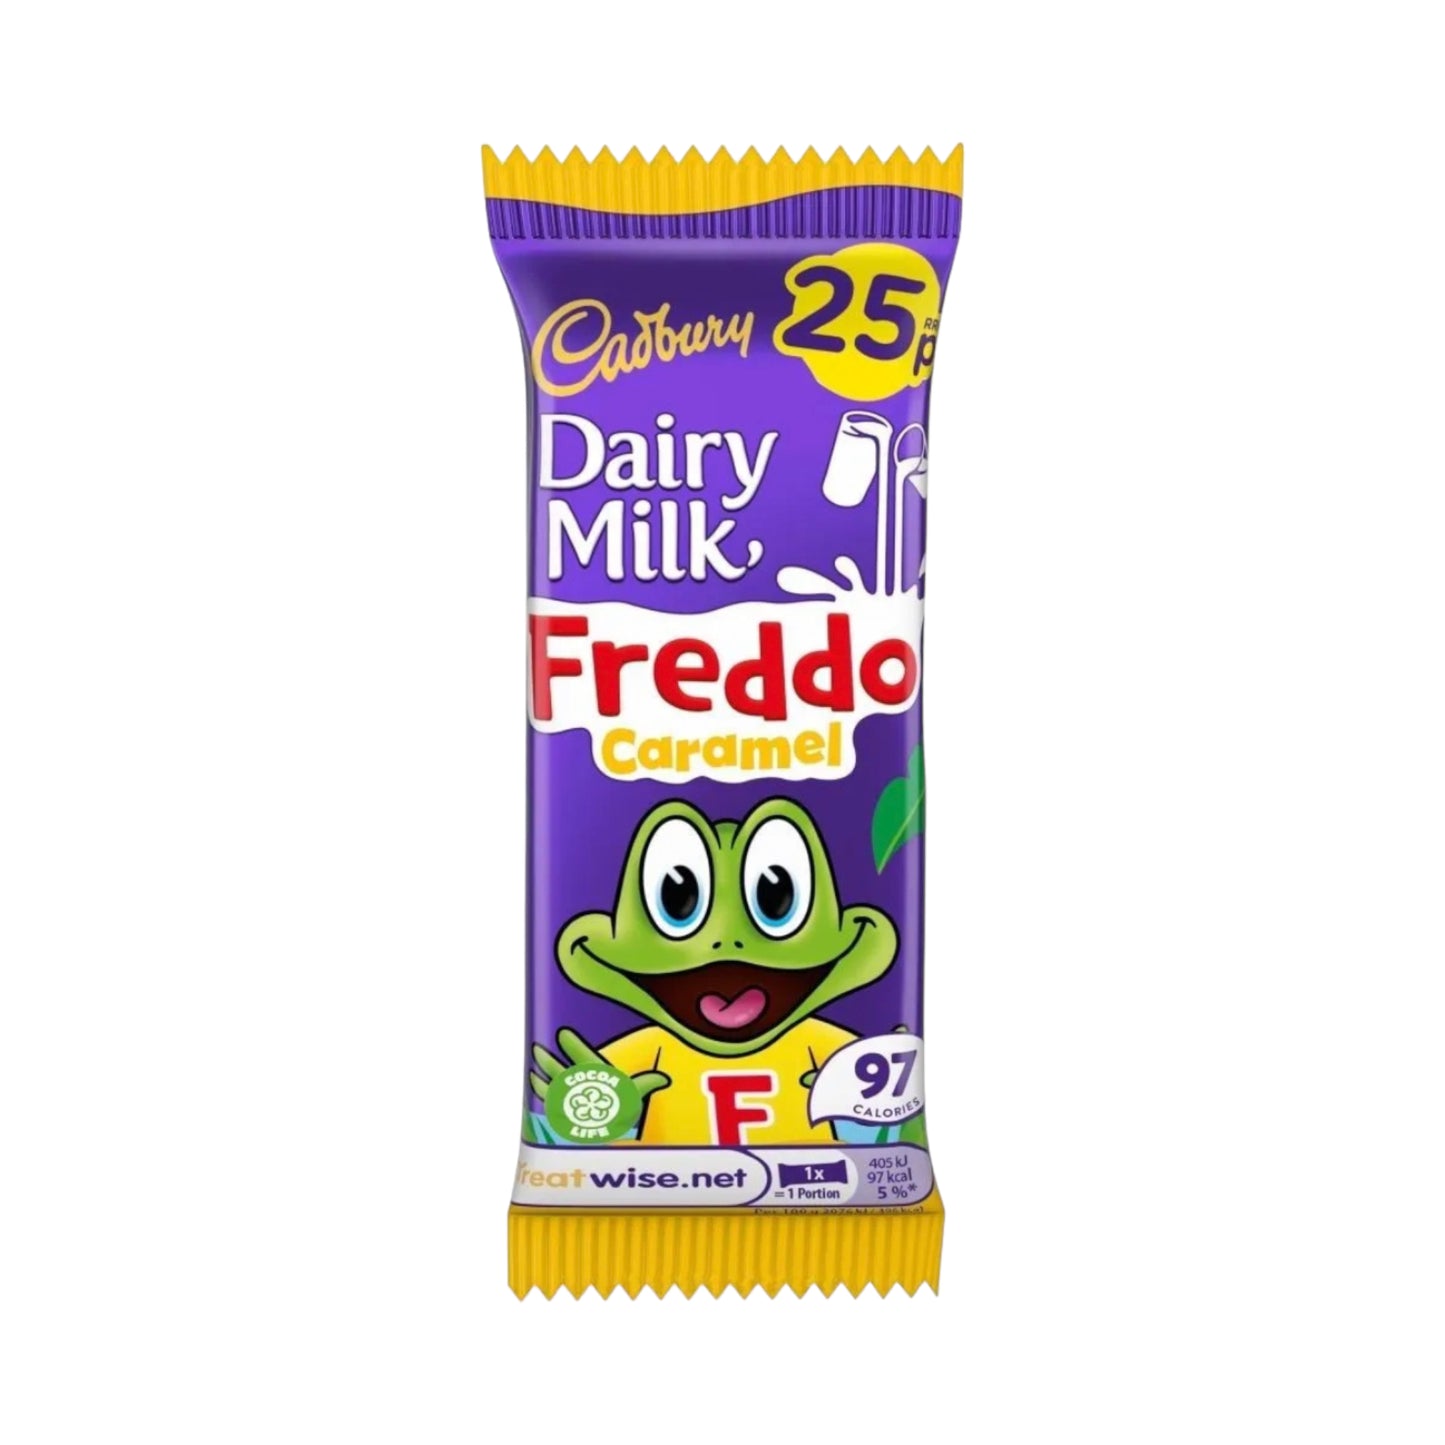 Cadbury Dairy Milk Freddo Caramel Chocolate Bar - 19.5g (PMP 25P)